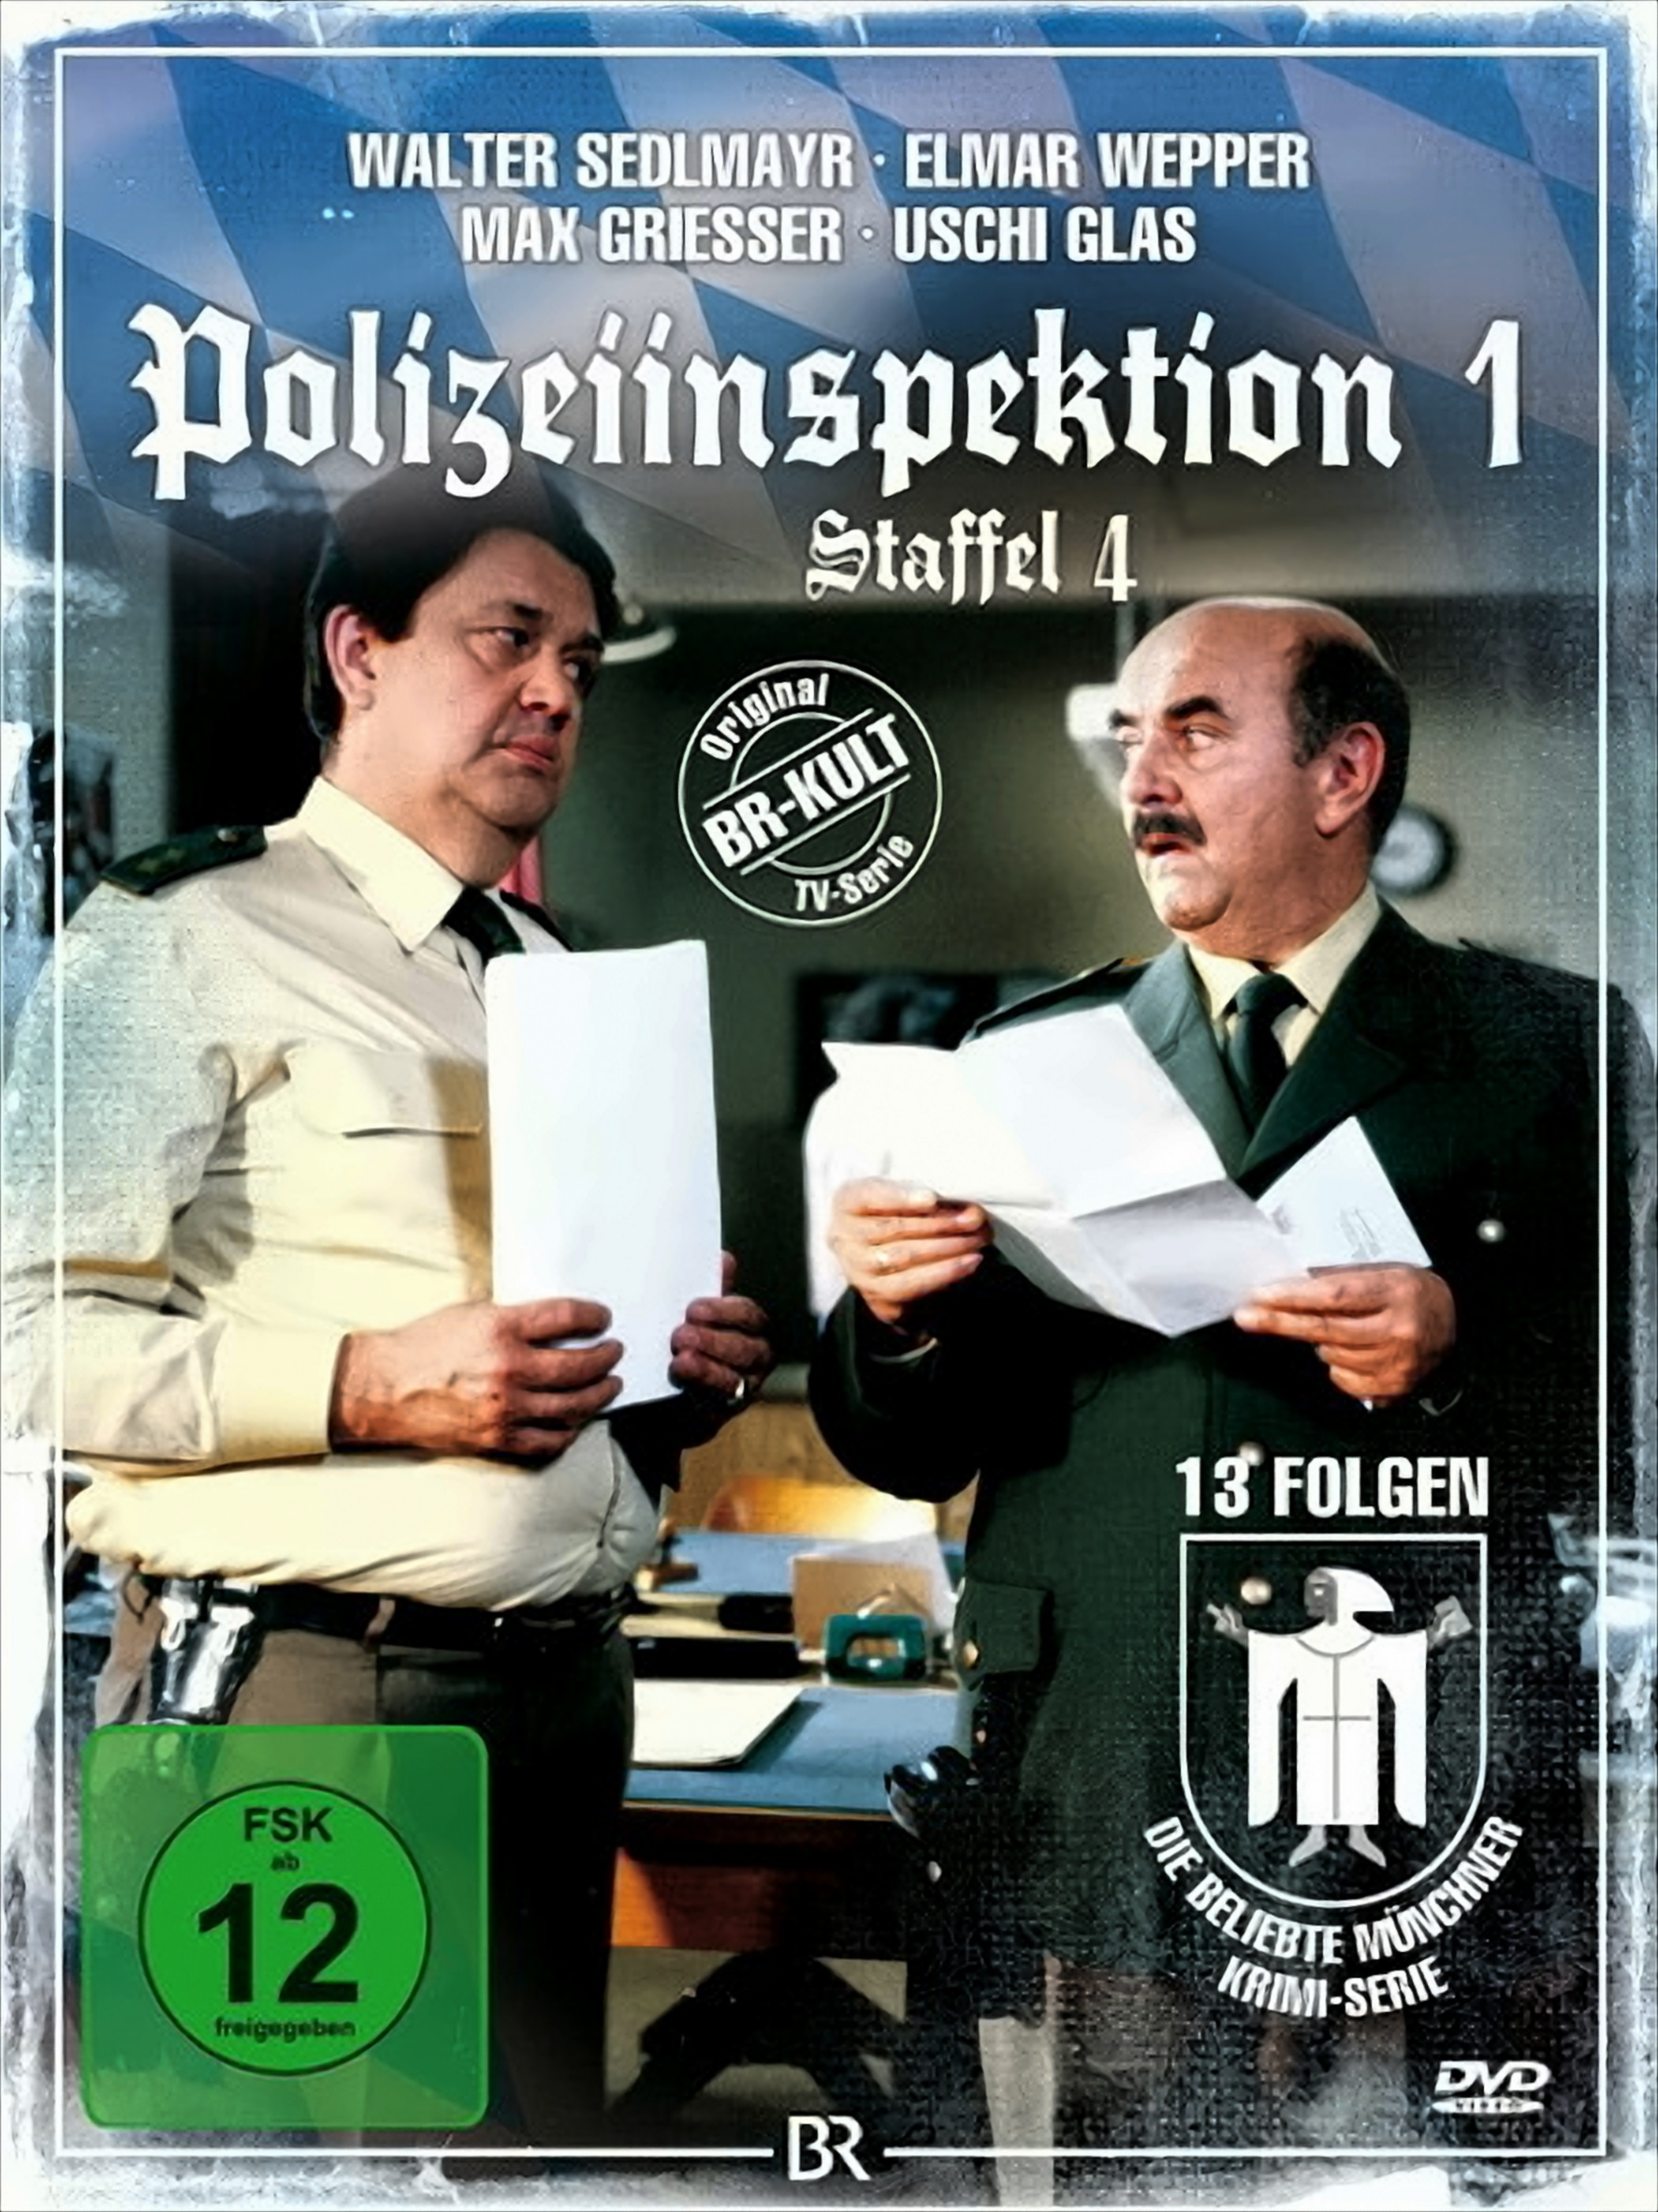 Polizeiinspektion 1 - Staffel 04 DVD